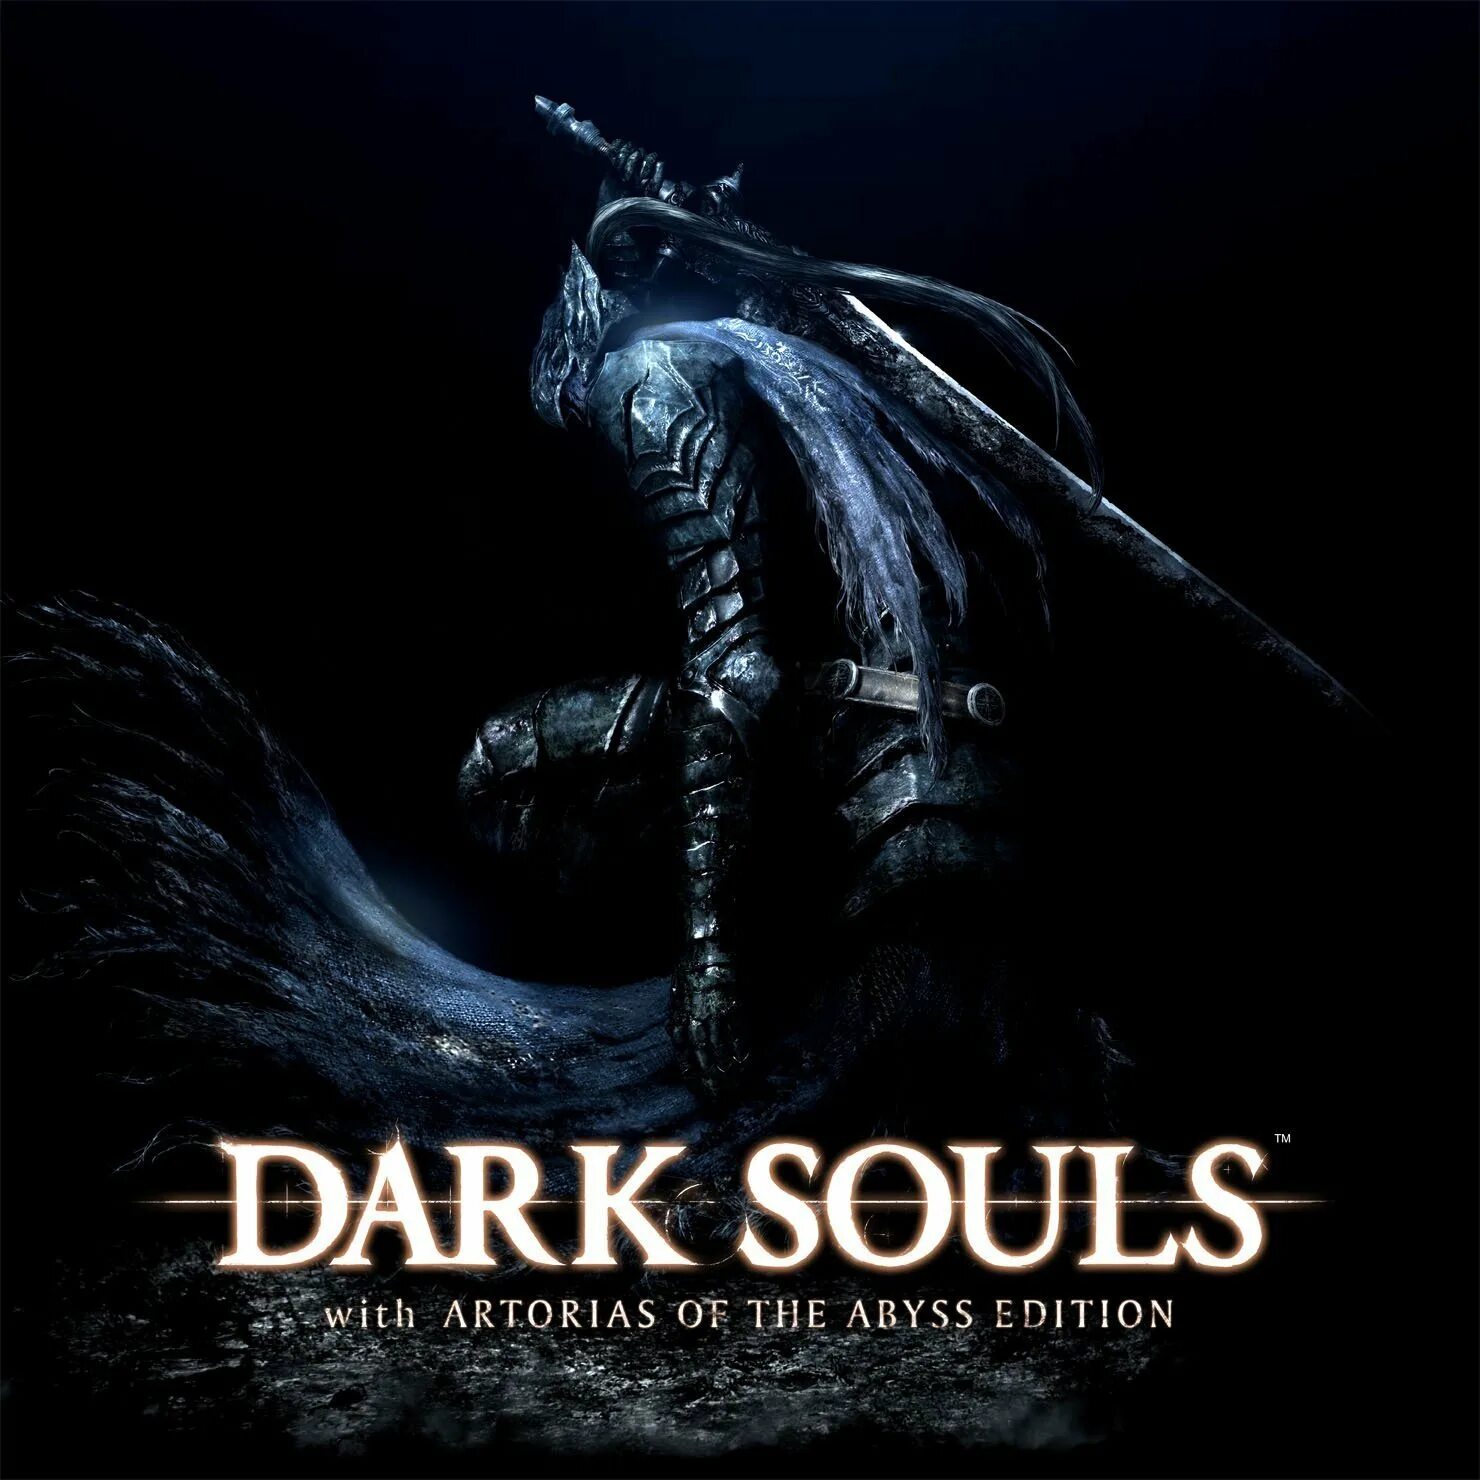 Дарк. Dark Souls 1 обложка. Dark Souls 1 Постер. Дарк соулс 1 обложка игры. Dark Souls 2 обложка игры.